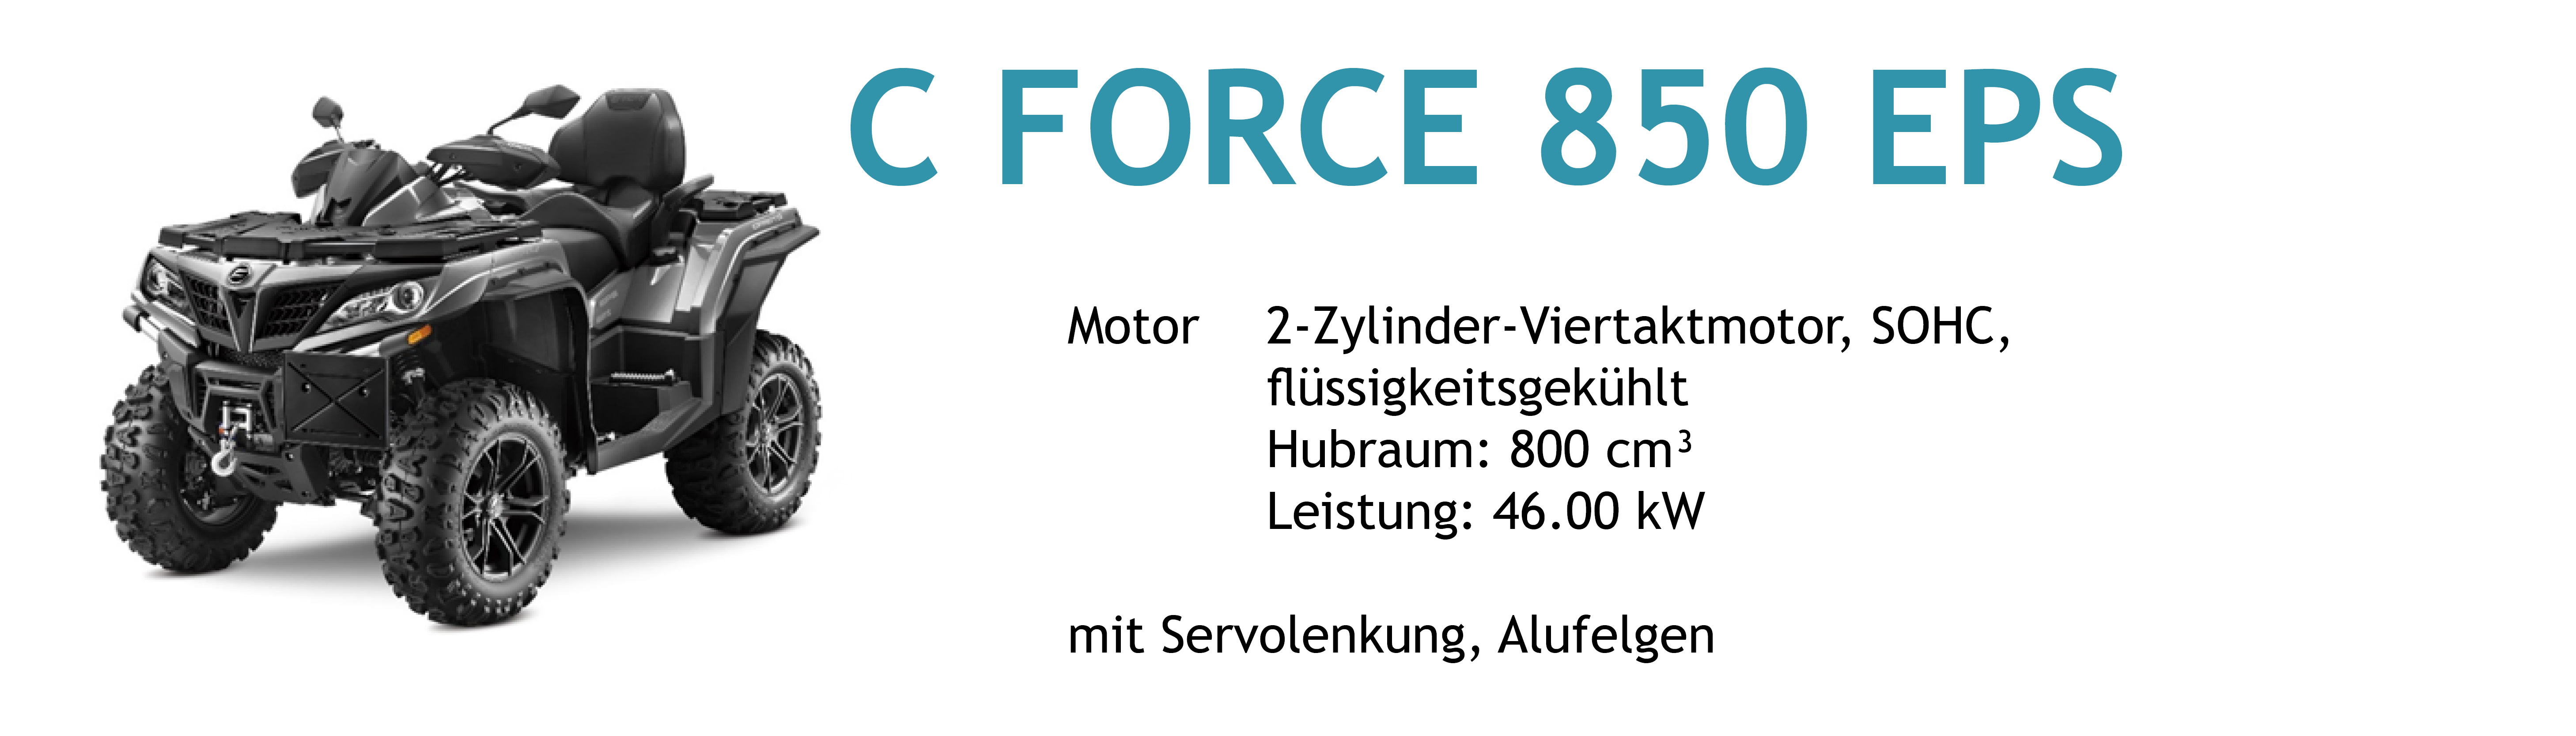 Cforce 850 EPS